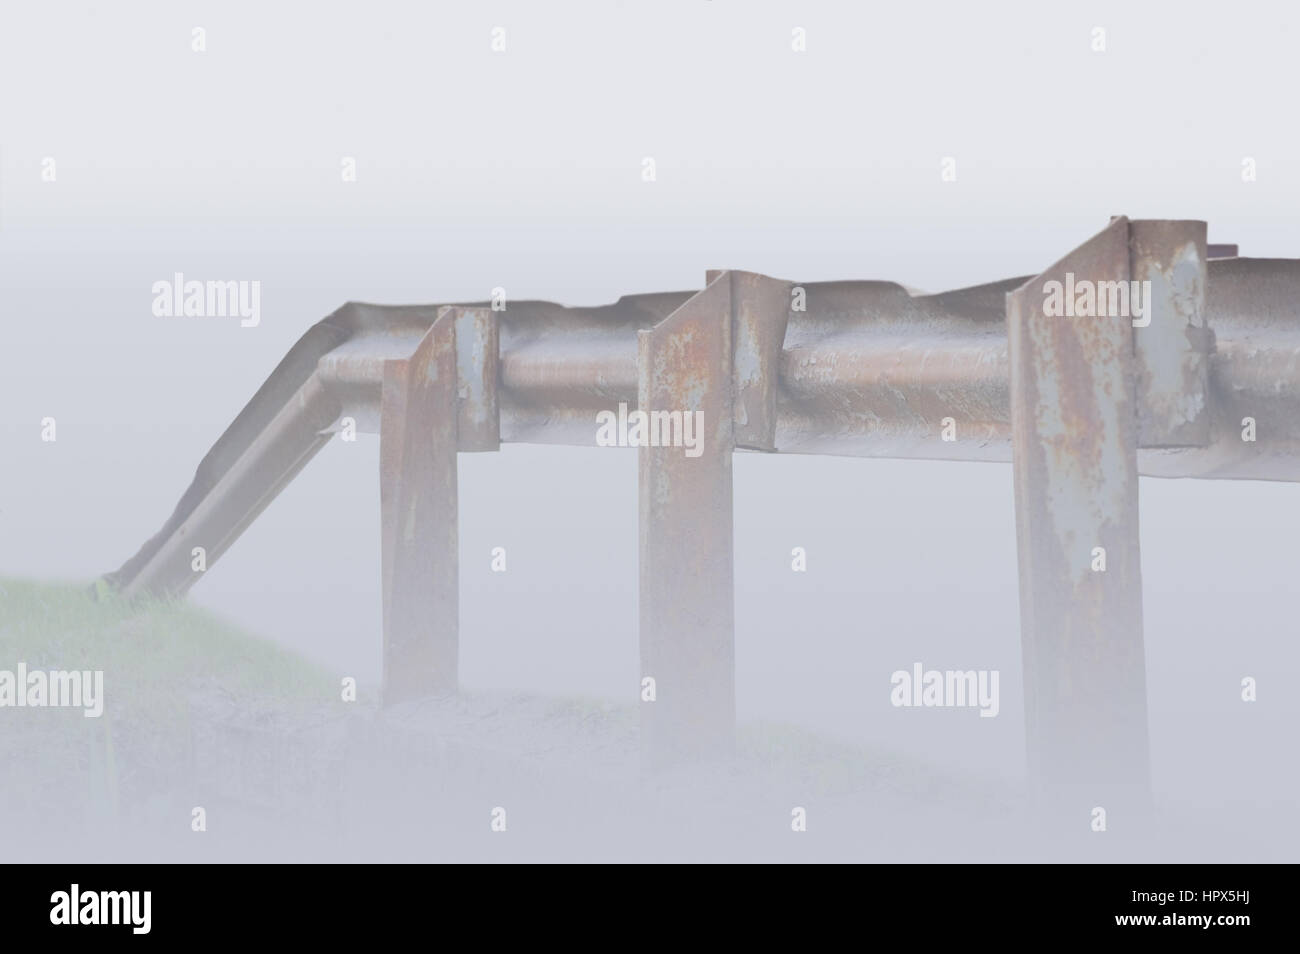 Ancien bent rusty grunge pont métallique ferroviaire, shoruded dans le brouillard, de grandes perspectives de brouillard Banque D'Images